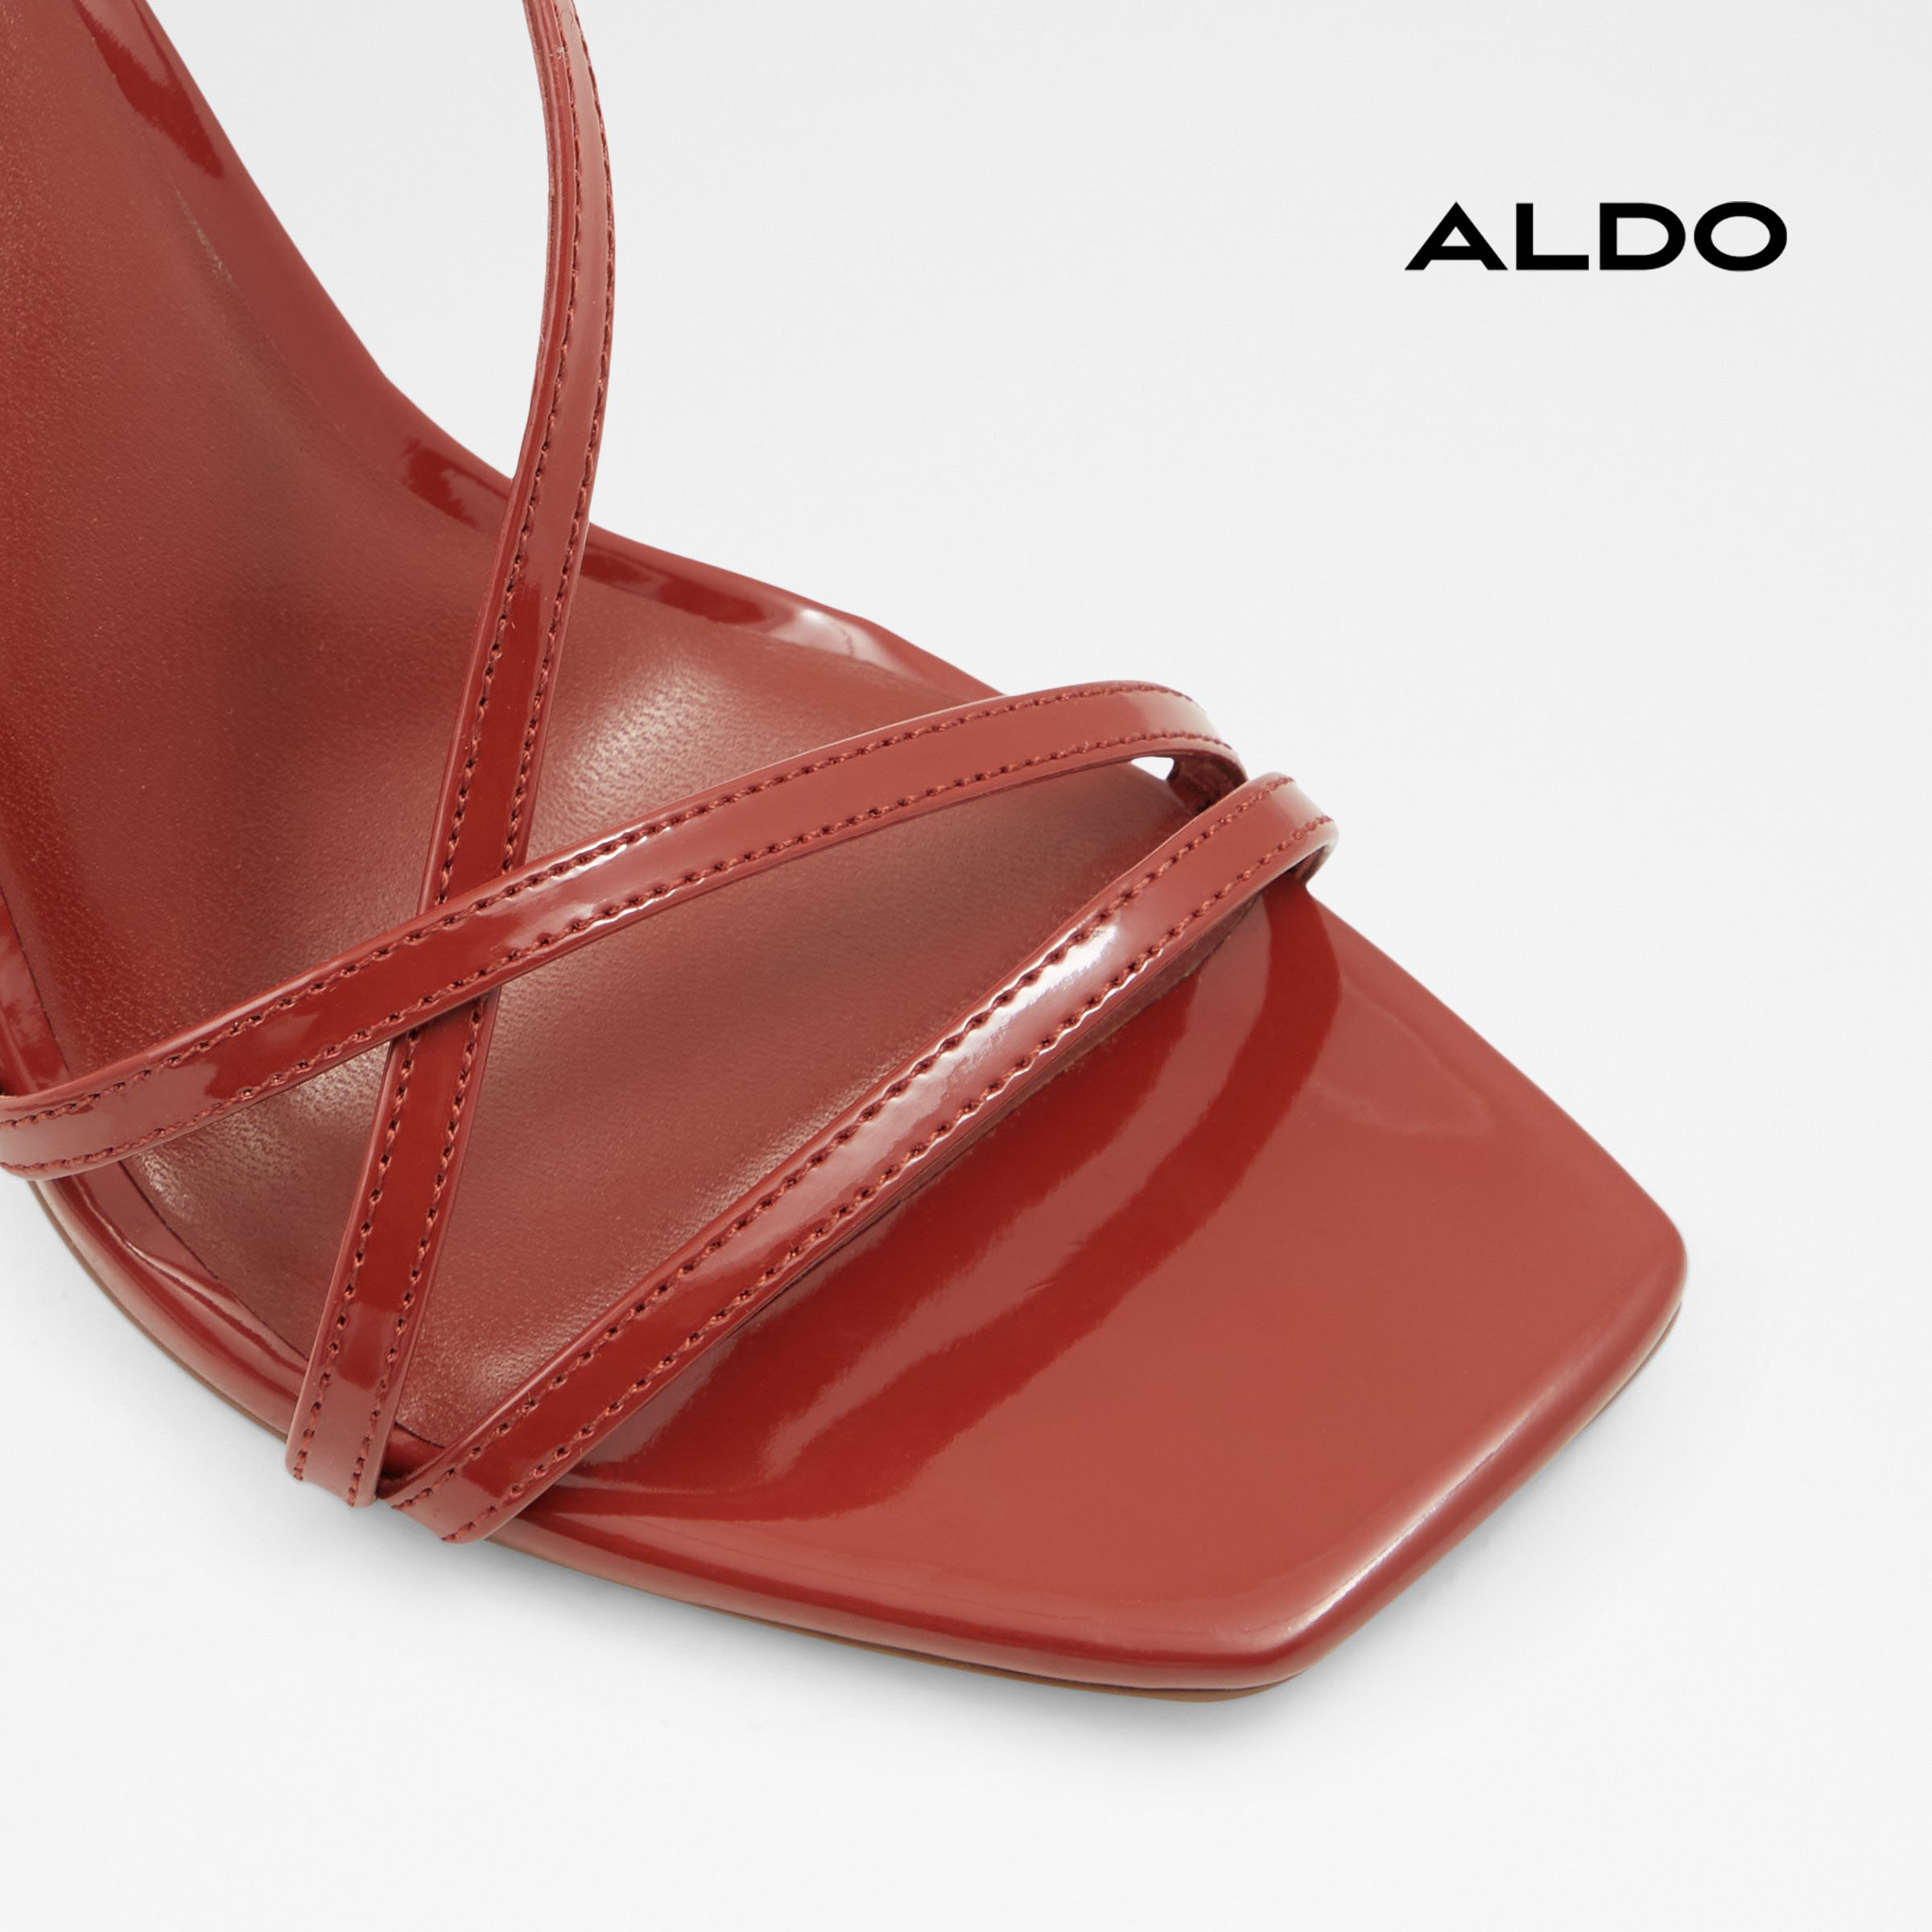 Giày sandals cao gót nữ gót nhọn ALDO RENDALITH